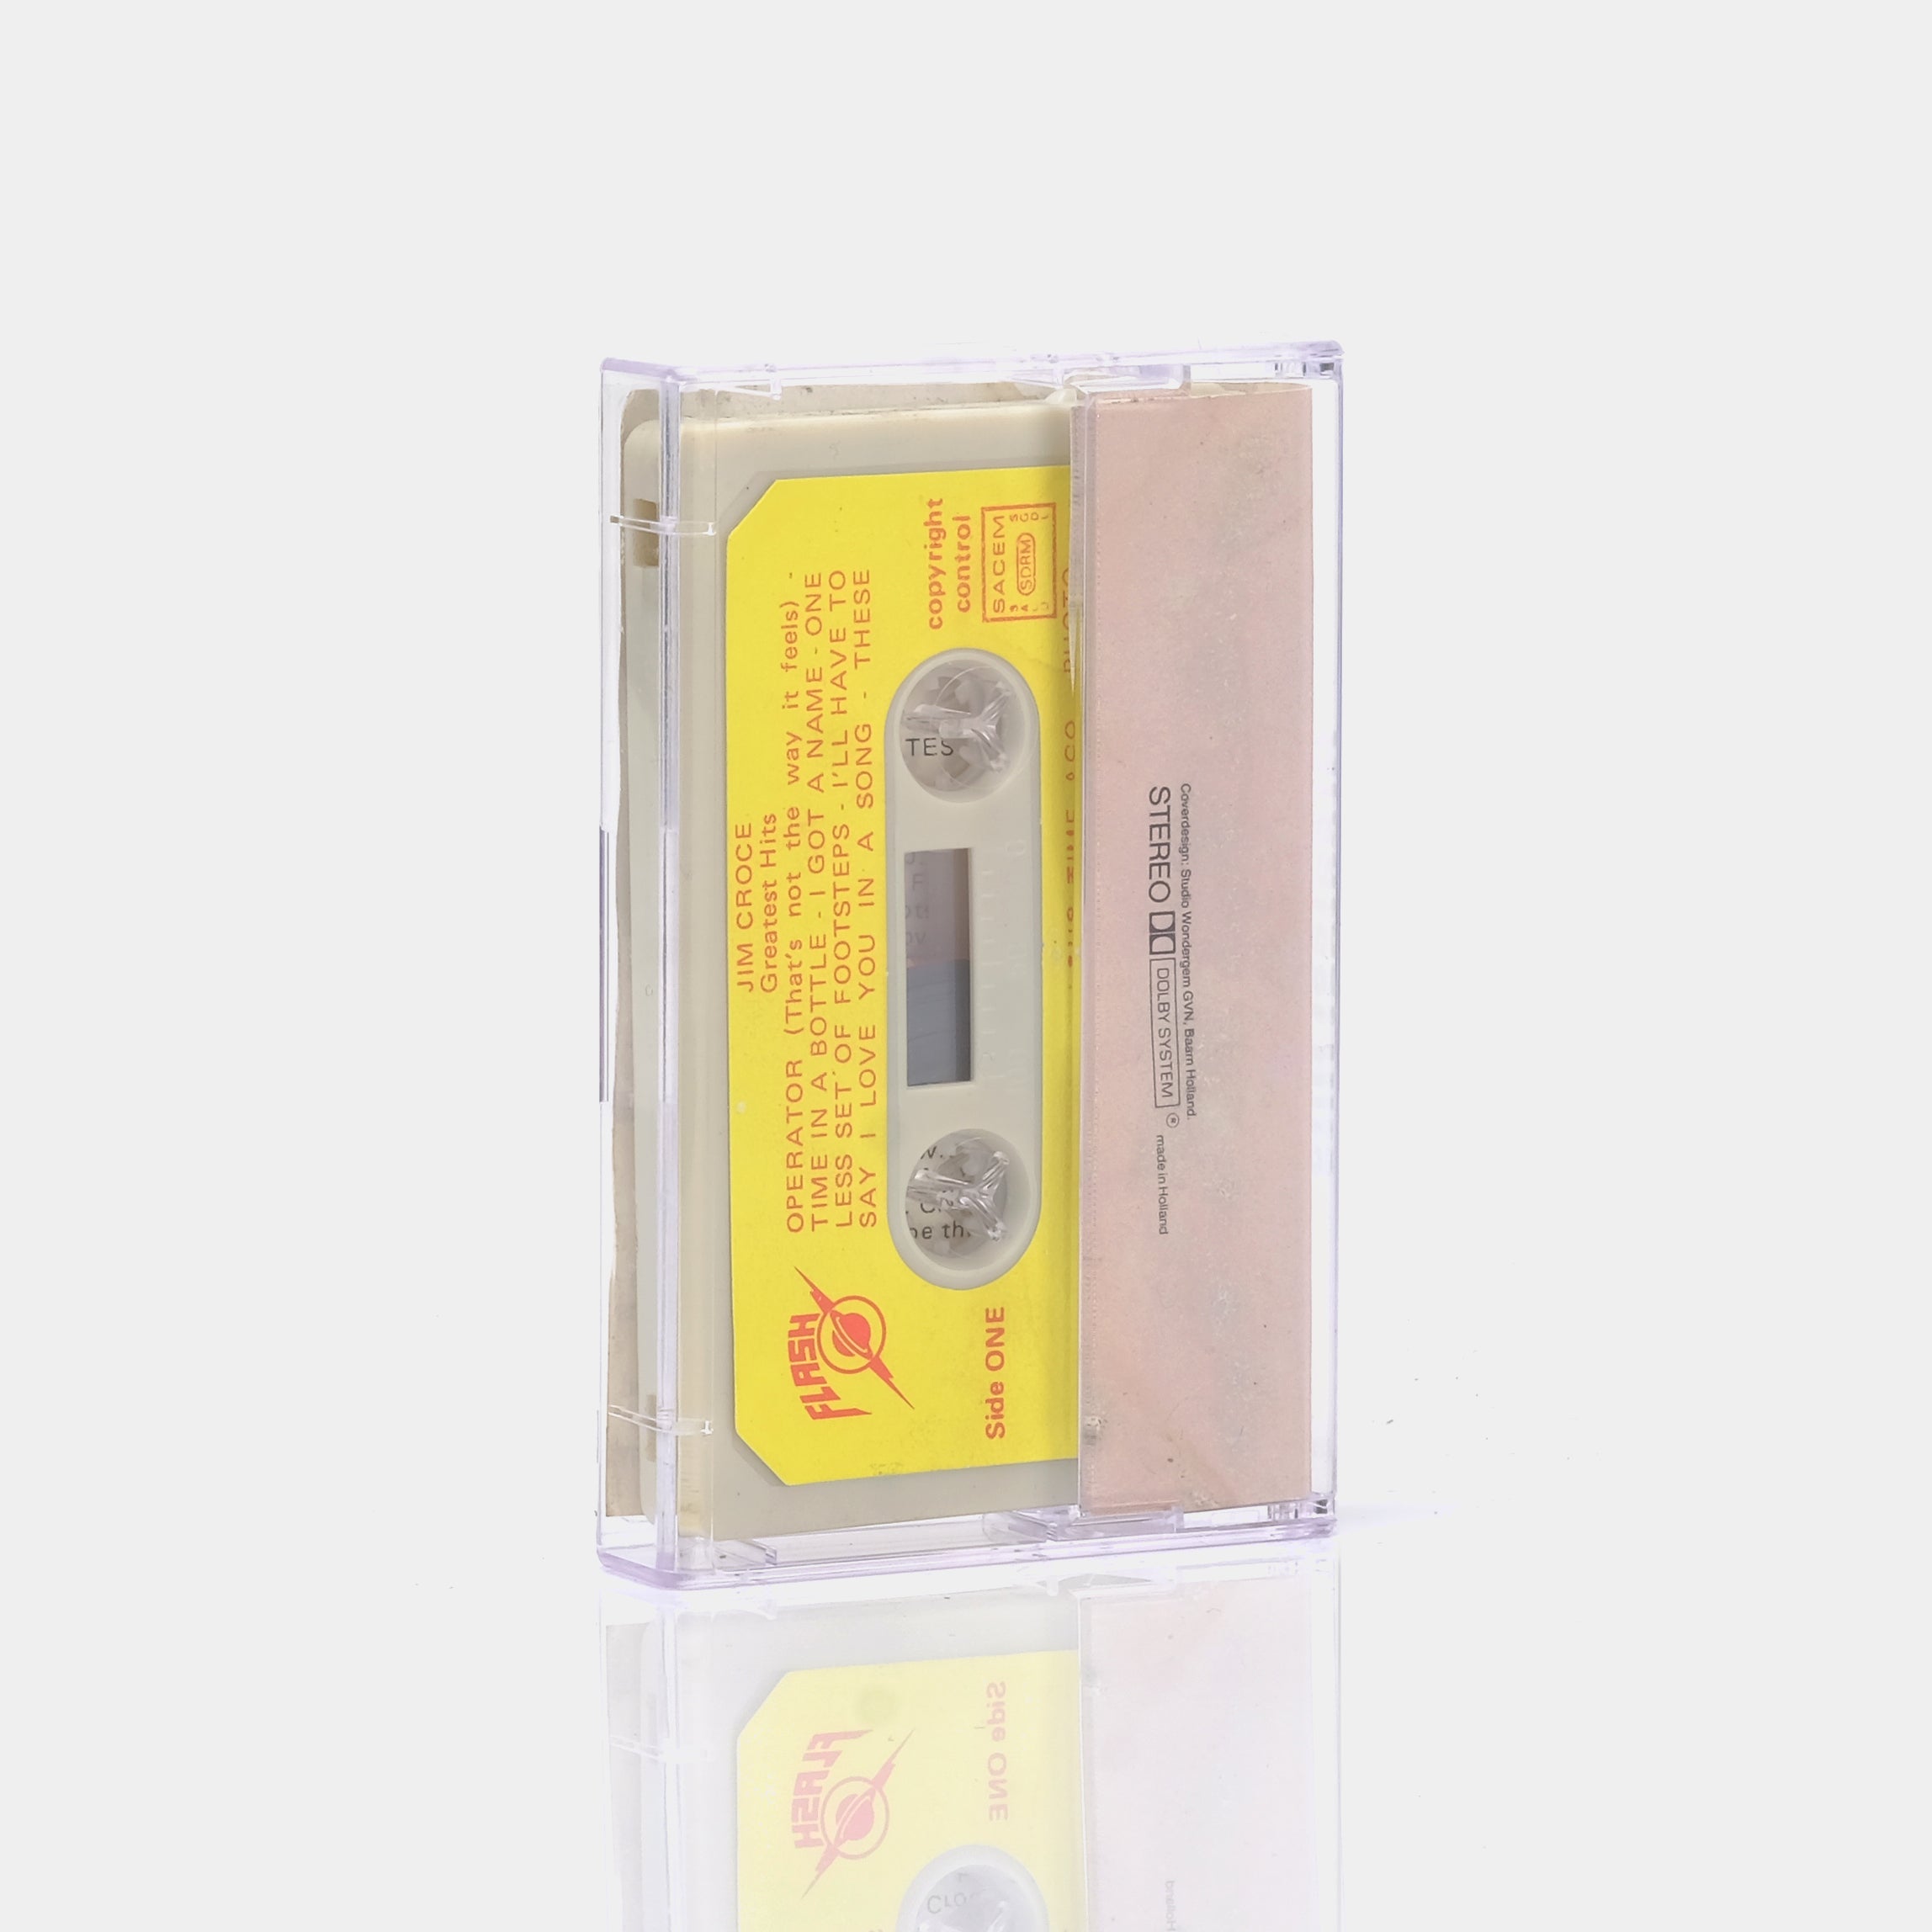 Jim Croce - Greatest Hits Cassette Tape